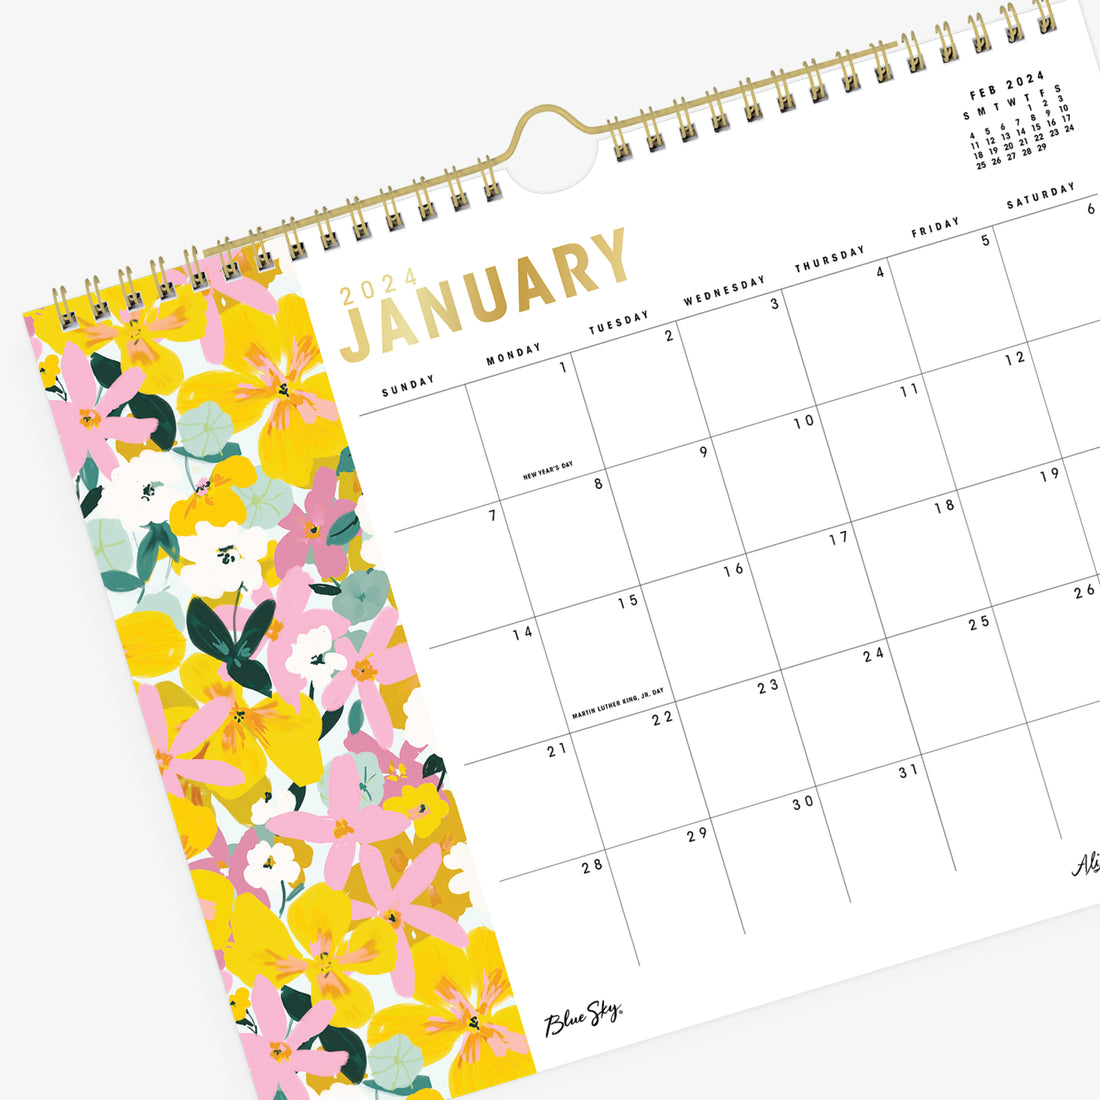 2024-2025 Blue Sky™ Ashlyn 24-Month Planning Calendar, 3-5/8 x 6-1/8,  Navy Clear, January 2024 to December 2025, 143959